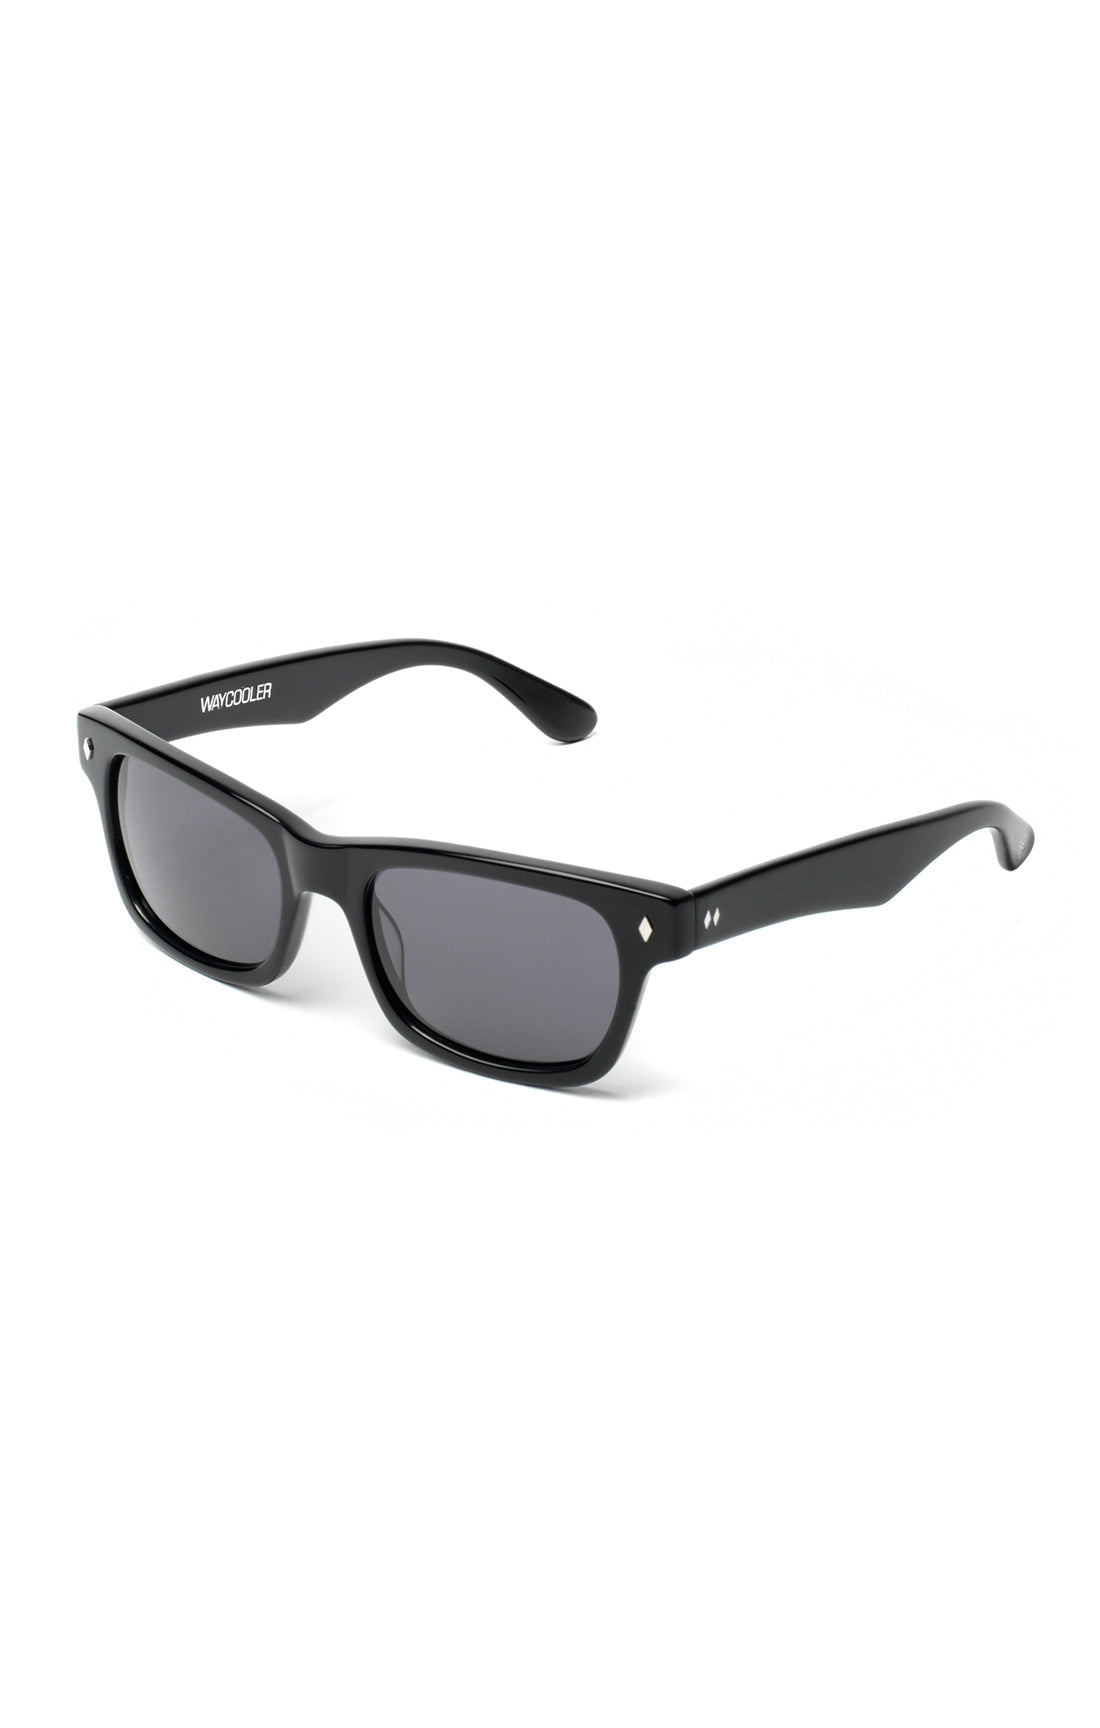 The WAYCOOLER Sunglasses - Black Frames w/ Smoked Lenses